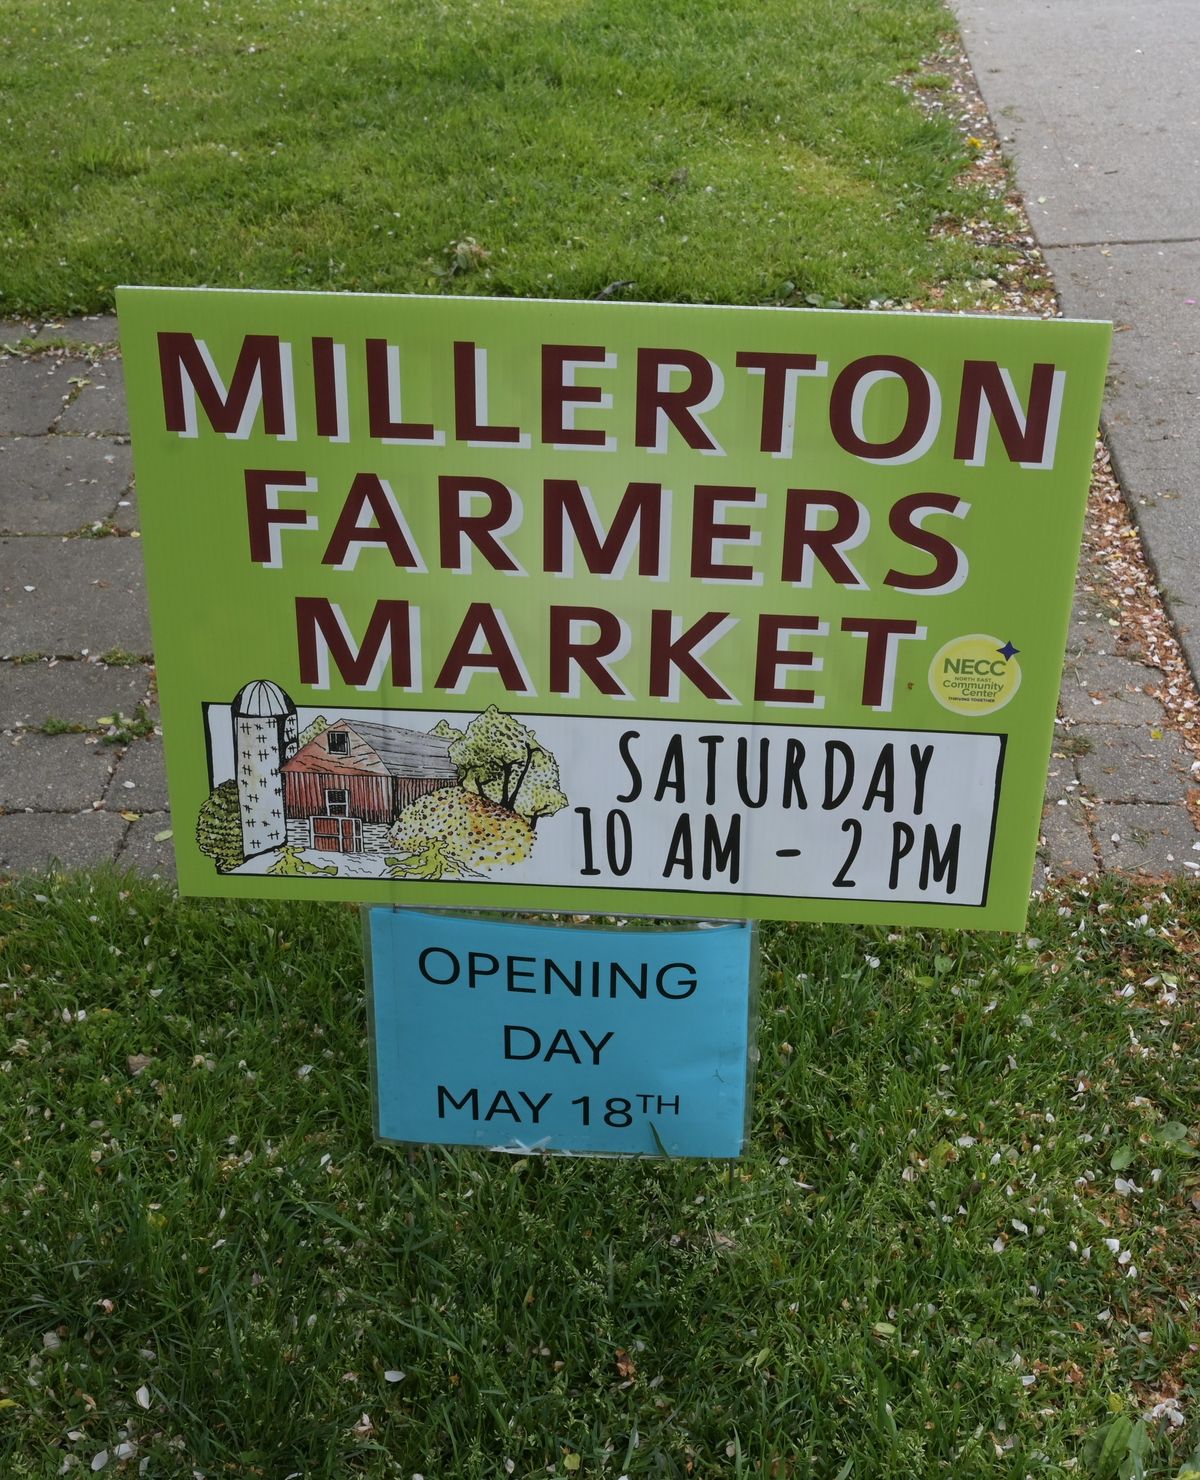 Millerton Farmer’s Market opens Saturday, May 18